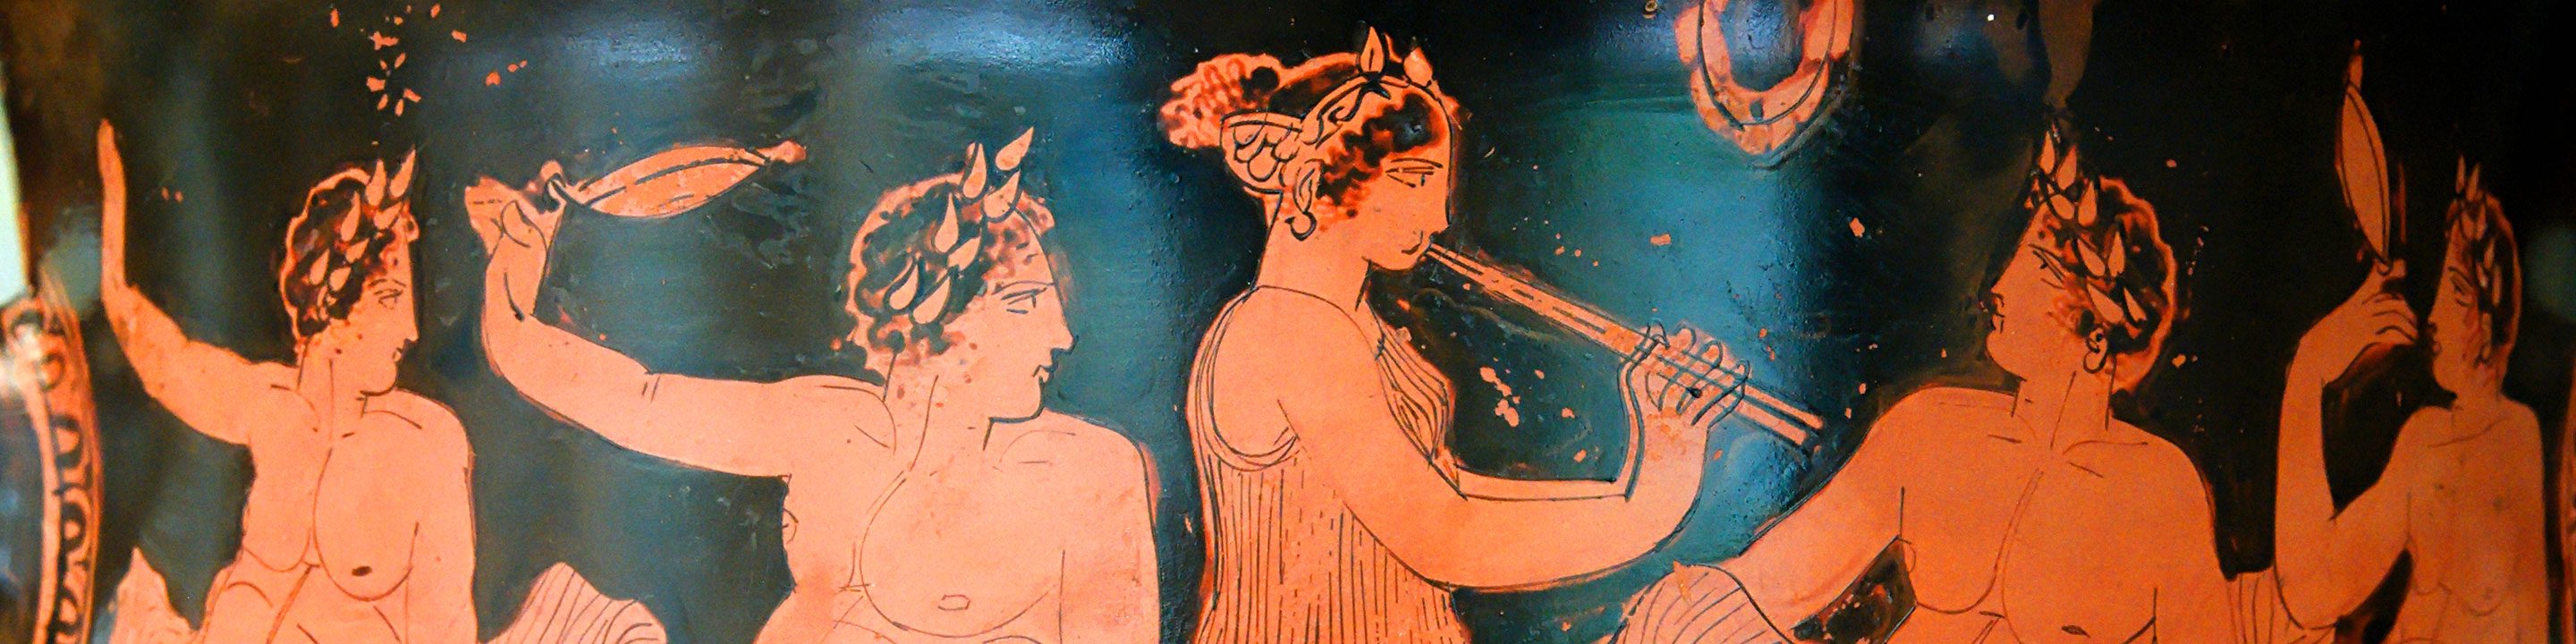 Weddings in Ancient Greece